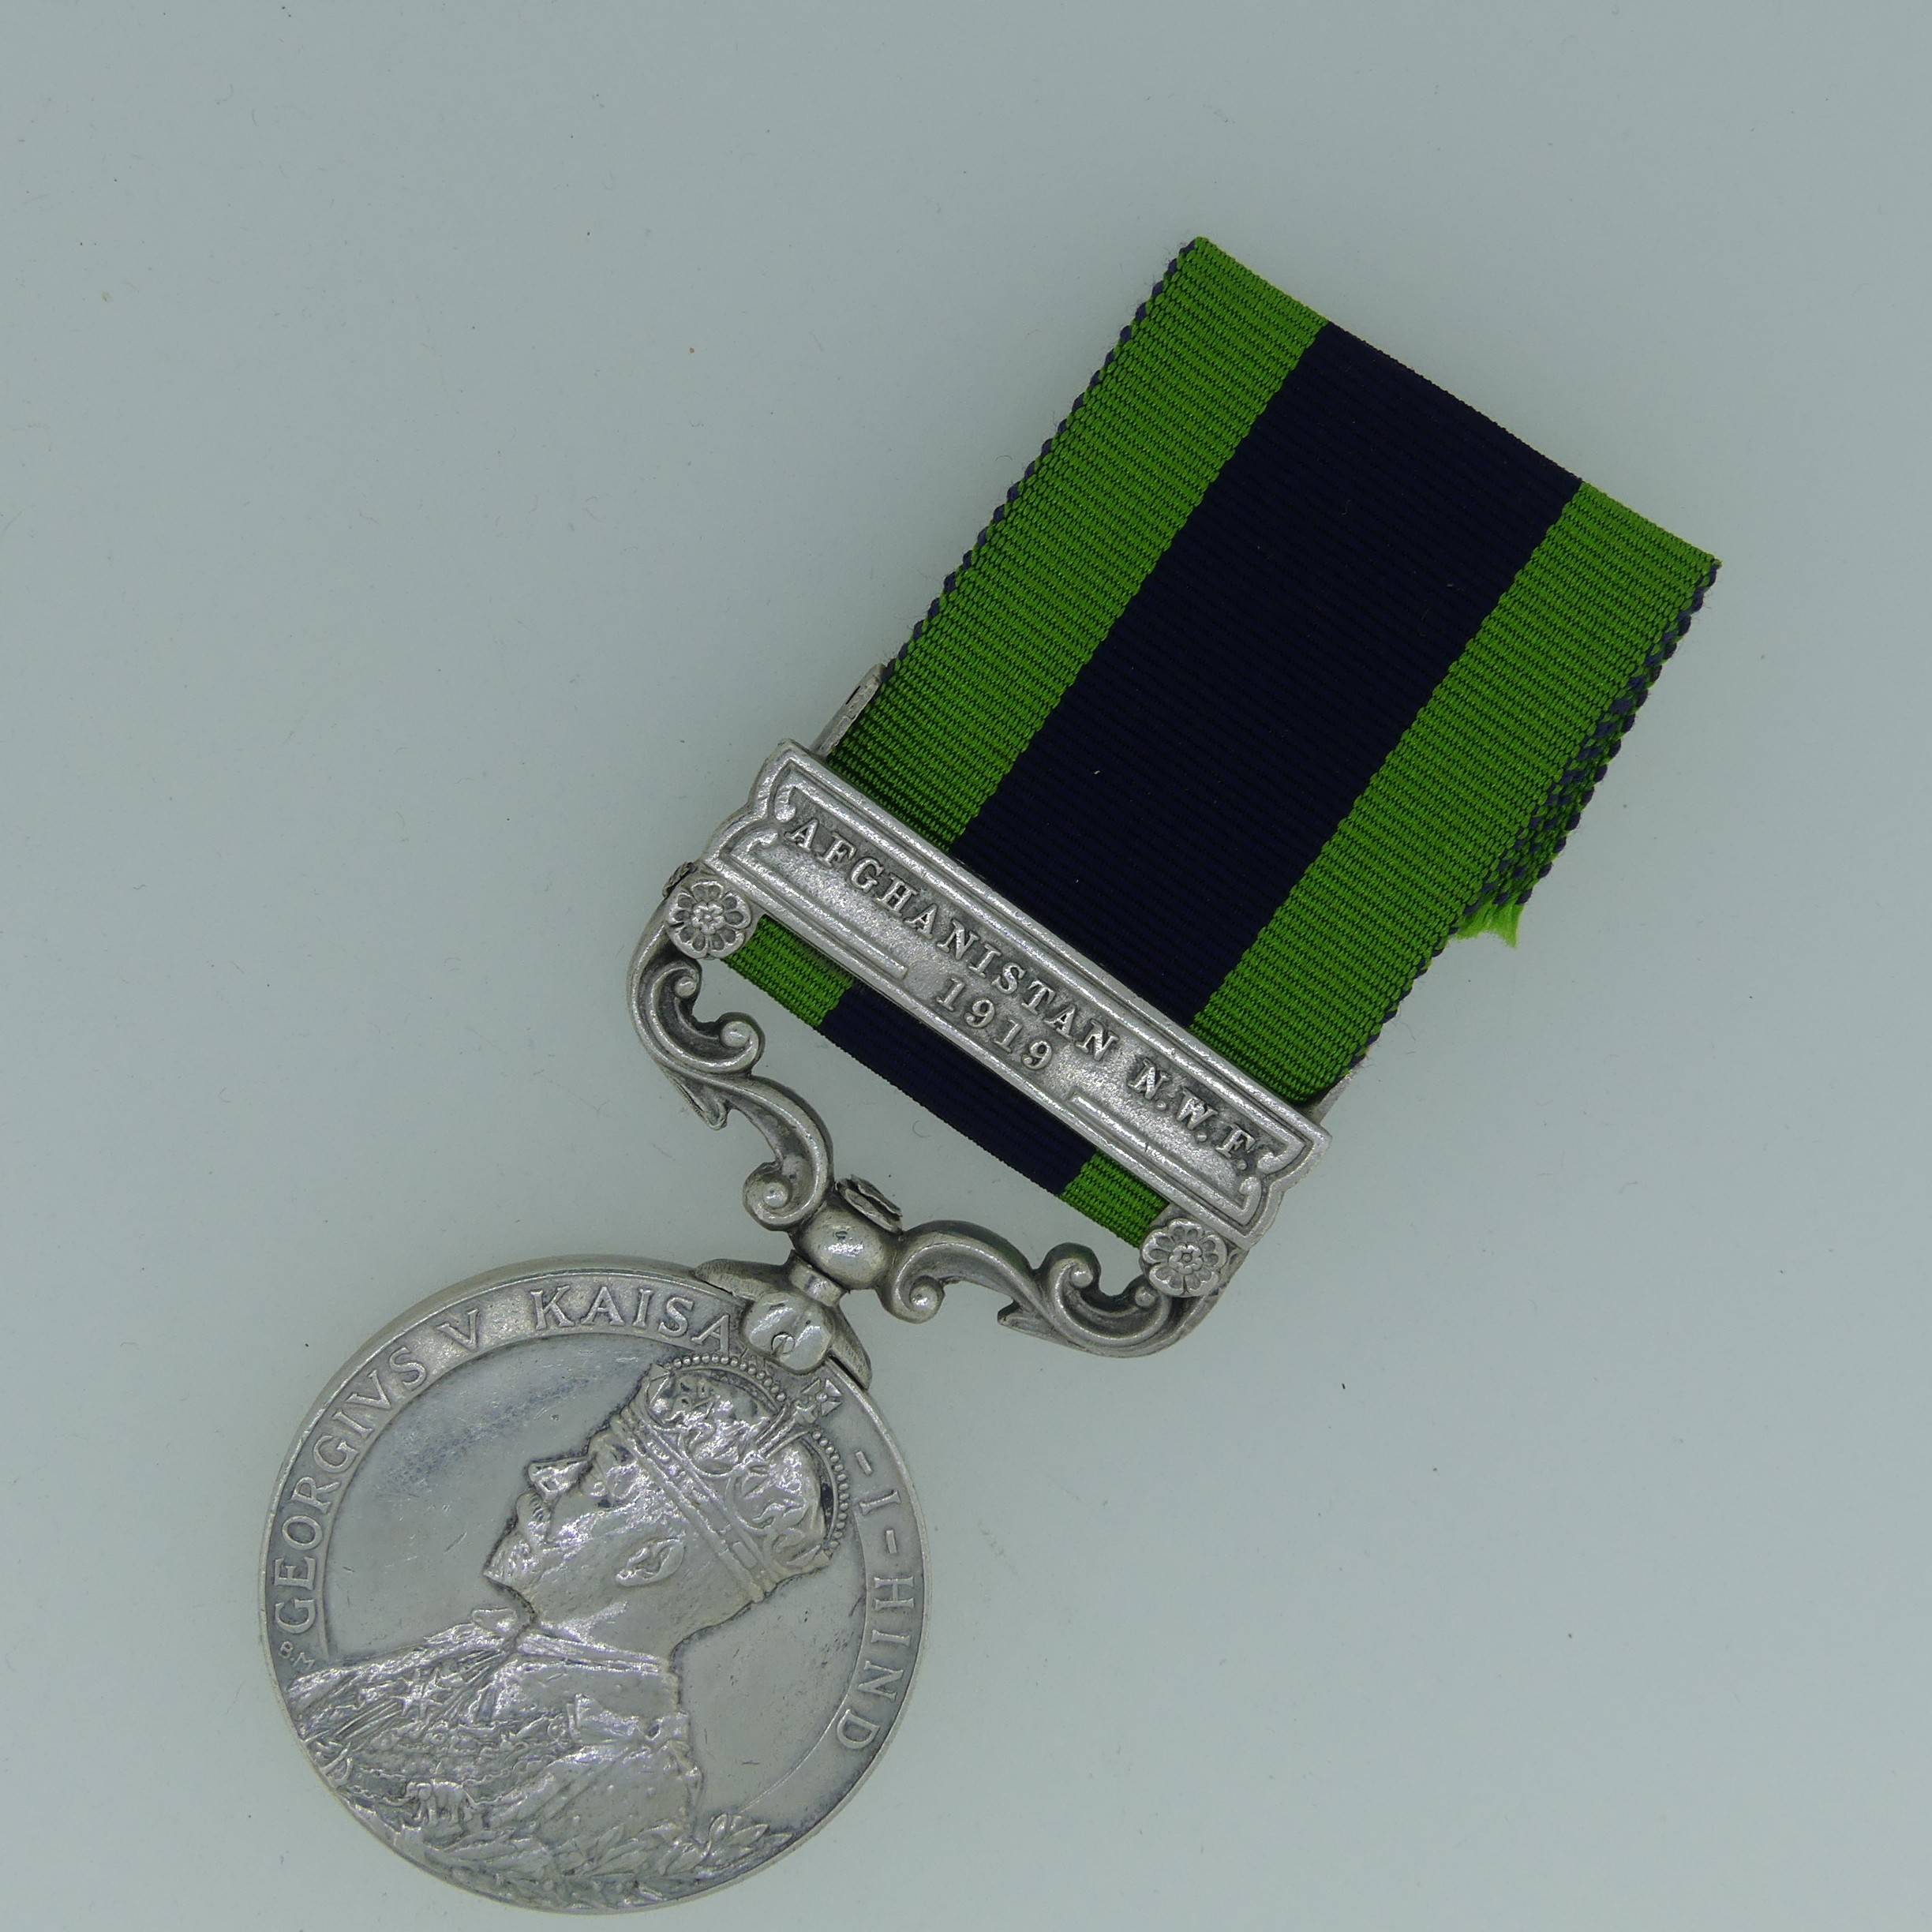 India General Service Medal, 1909, One clasp (Afghanistan NWF 1919) 916 Nk Abdul Qadir 1-107 Pnrs.